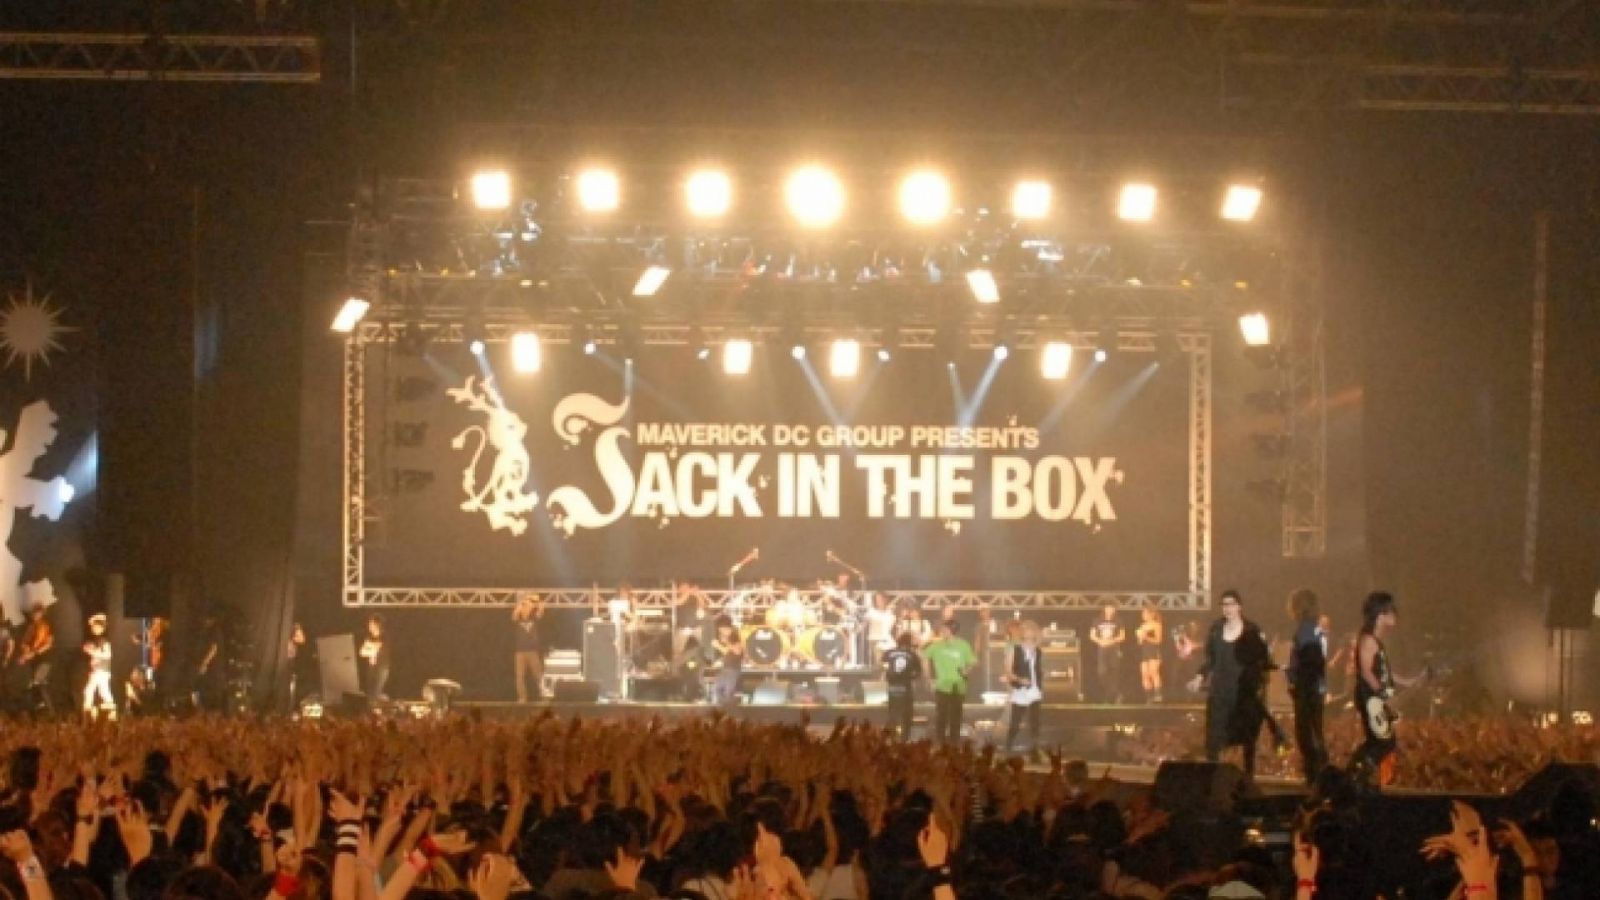 JACK IN THE BOX 2010 livestreamina © Maverick DC Group